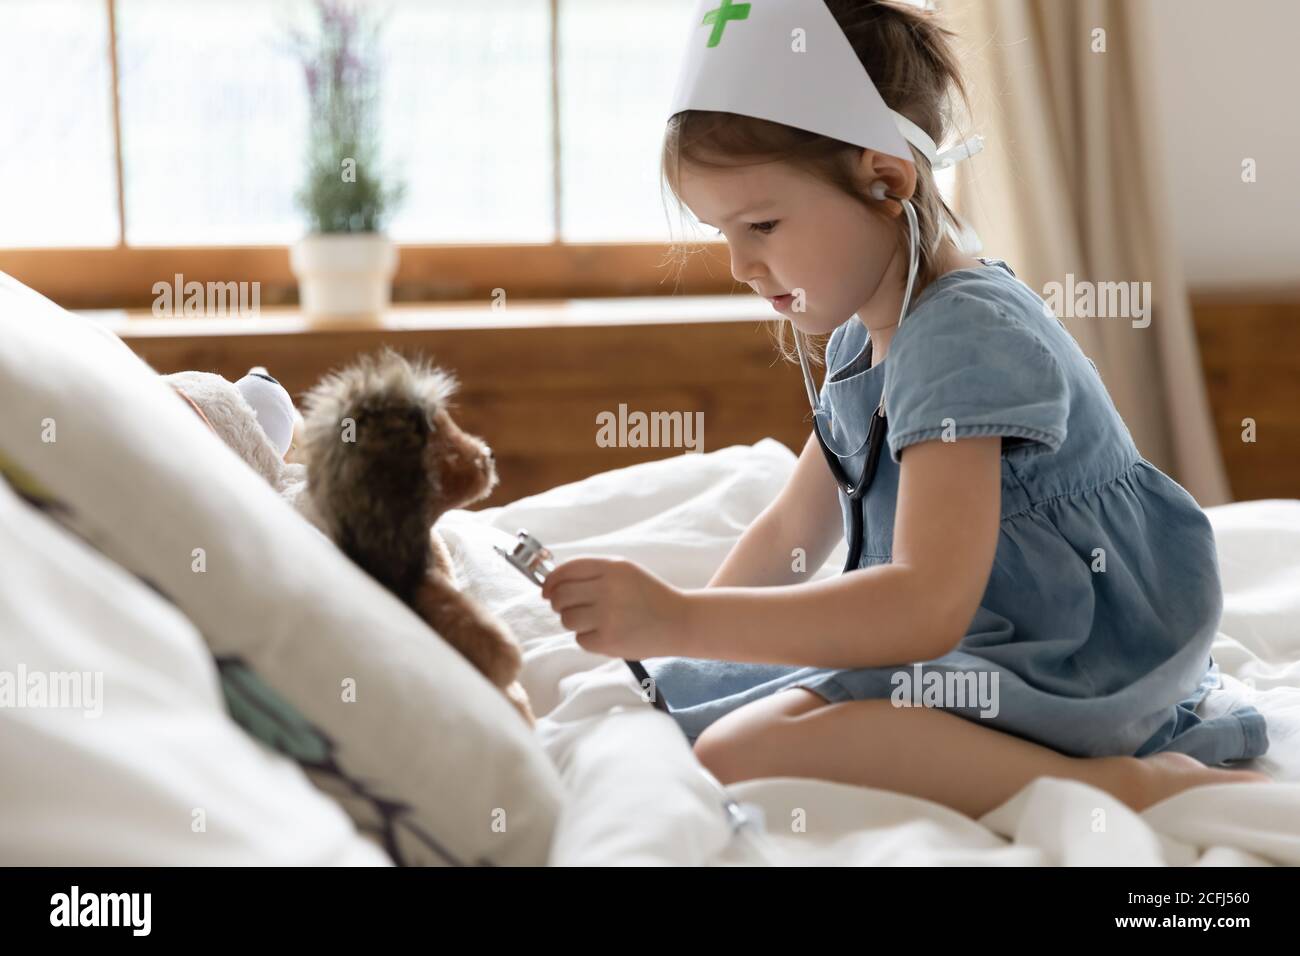 Nurse kid use stethoscope listen heartbeat of soft hedgehog toy Stock Photo